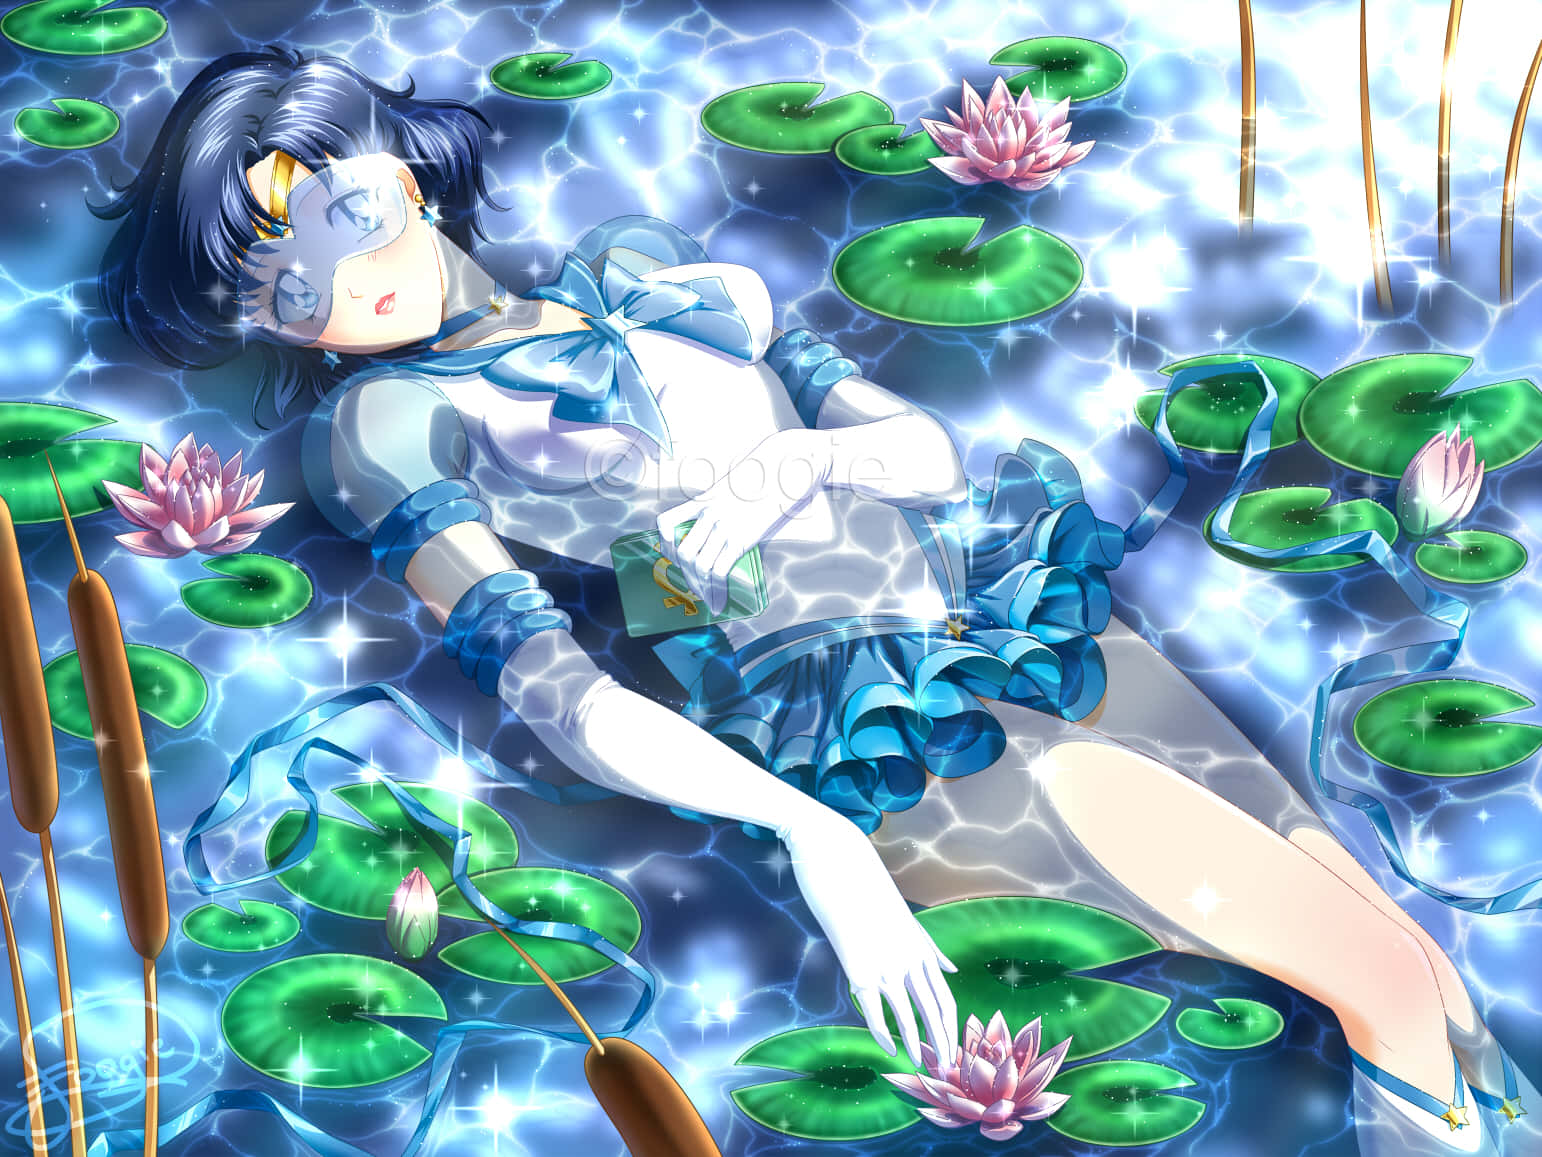 Sailor Mercury Lying On A Pond